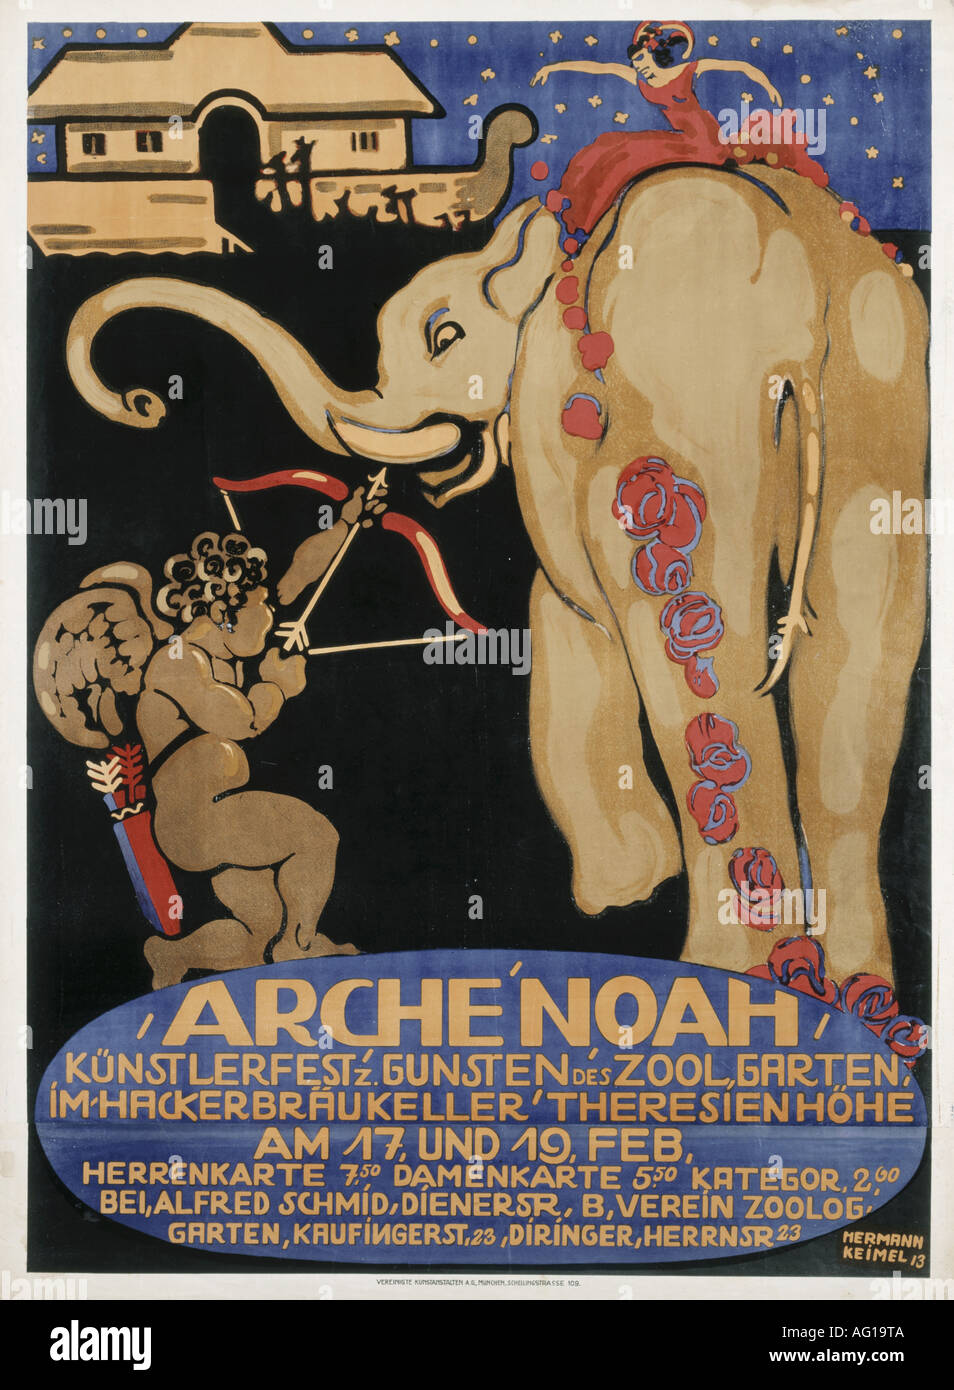 festivity, balls and parties, Hackerbräukeller Thersienhöhe, 'Arche Noah Künstlerfest', Munich, 1920er Jahre, poster, design by Hermann Keimel (1899 - 1948), , Stock Photo